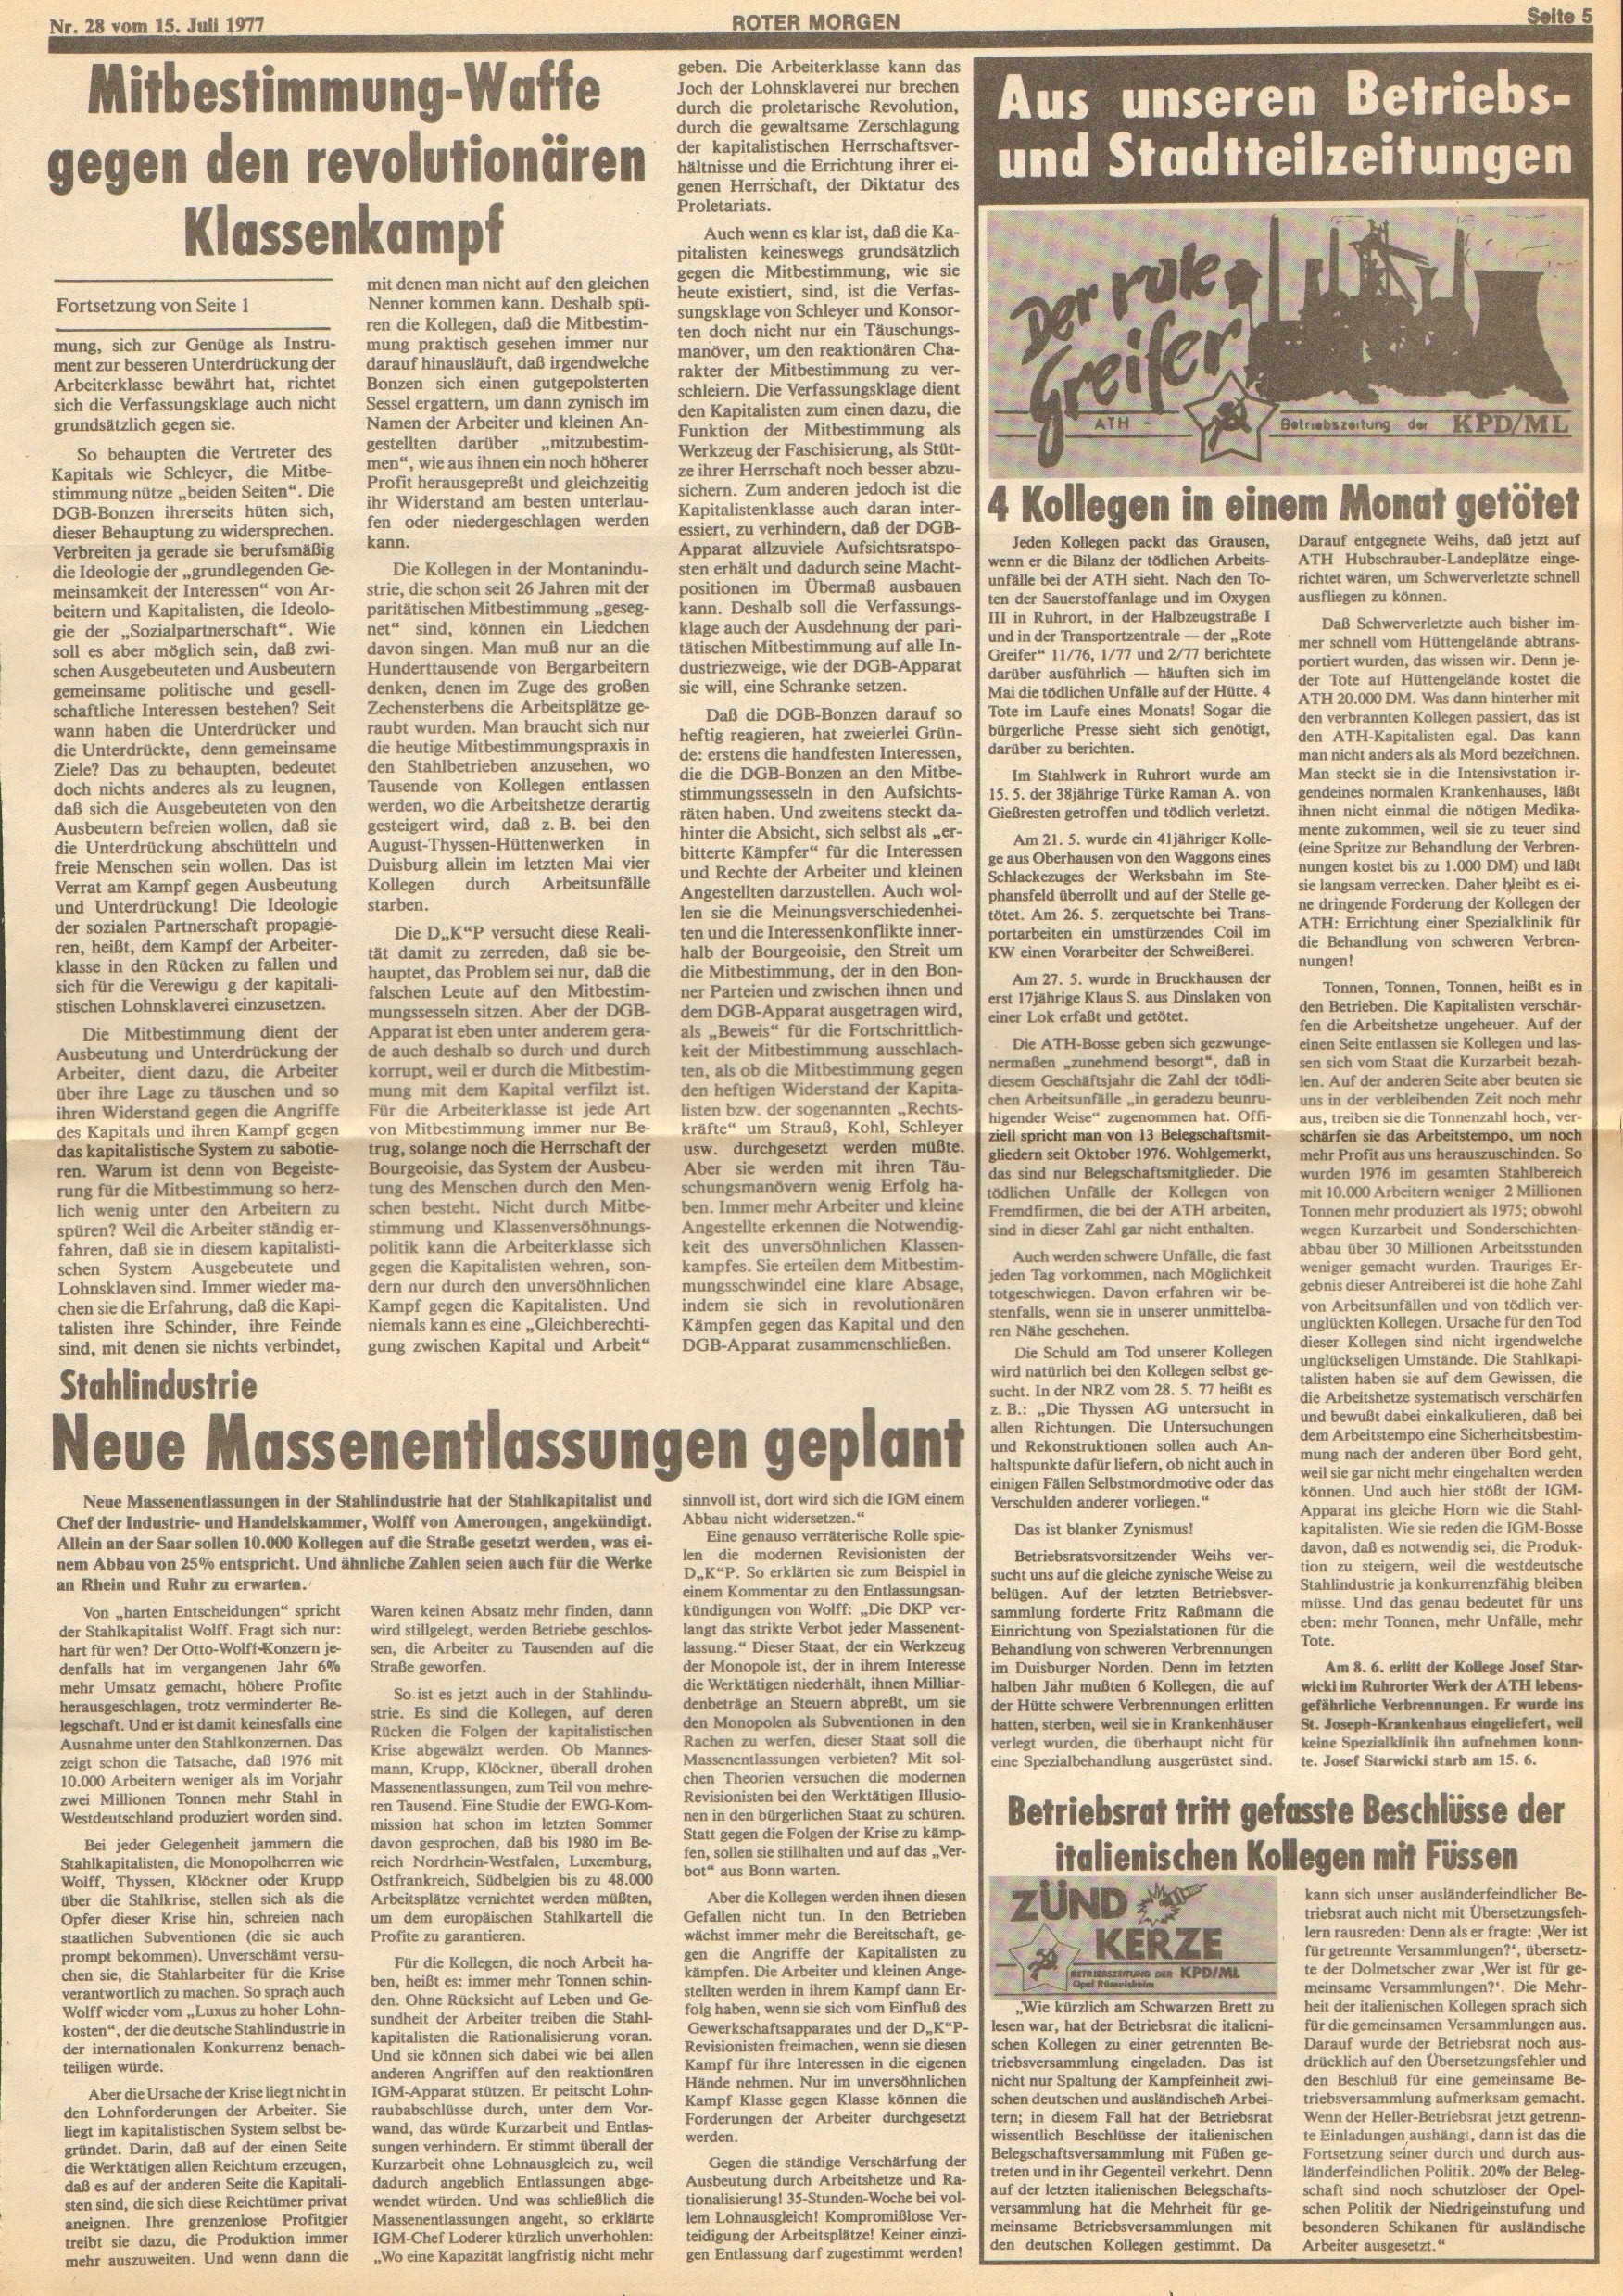 Roter Morgen, 11. Jg., 15. Juli 1977, Nr. 28, Seite 5